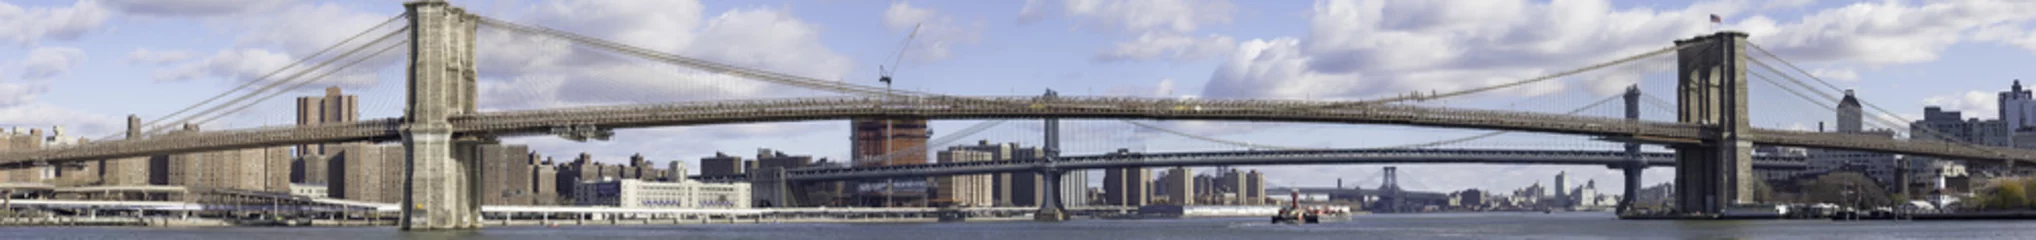 Cercles muraux Brooklyn Bridge Brooklyn Bridge, New York